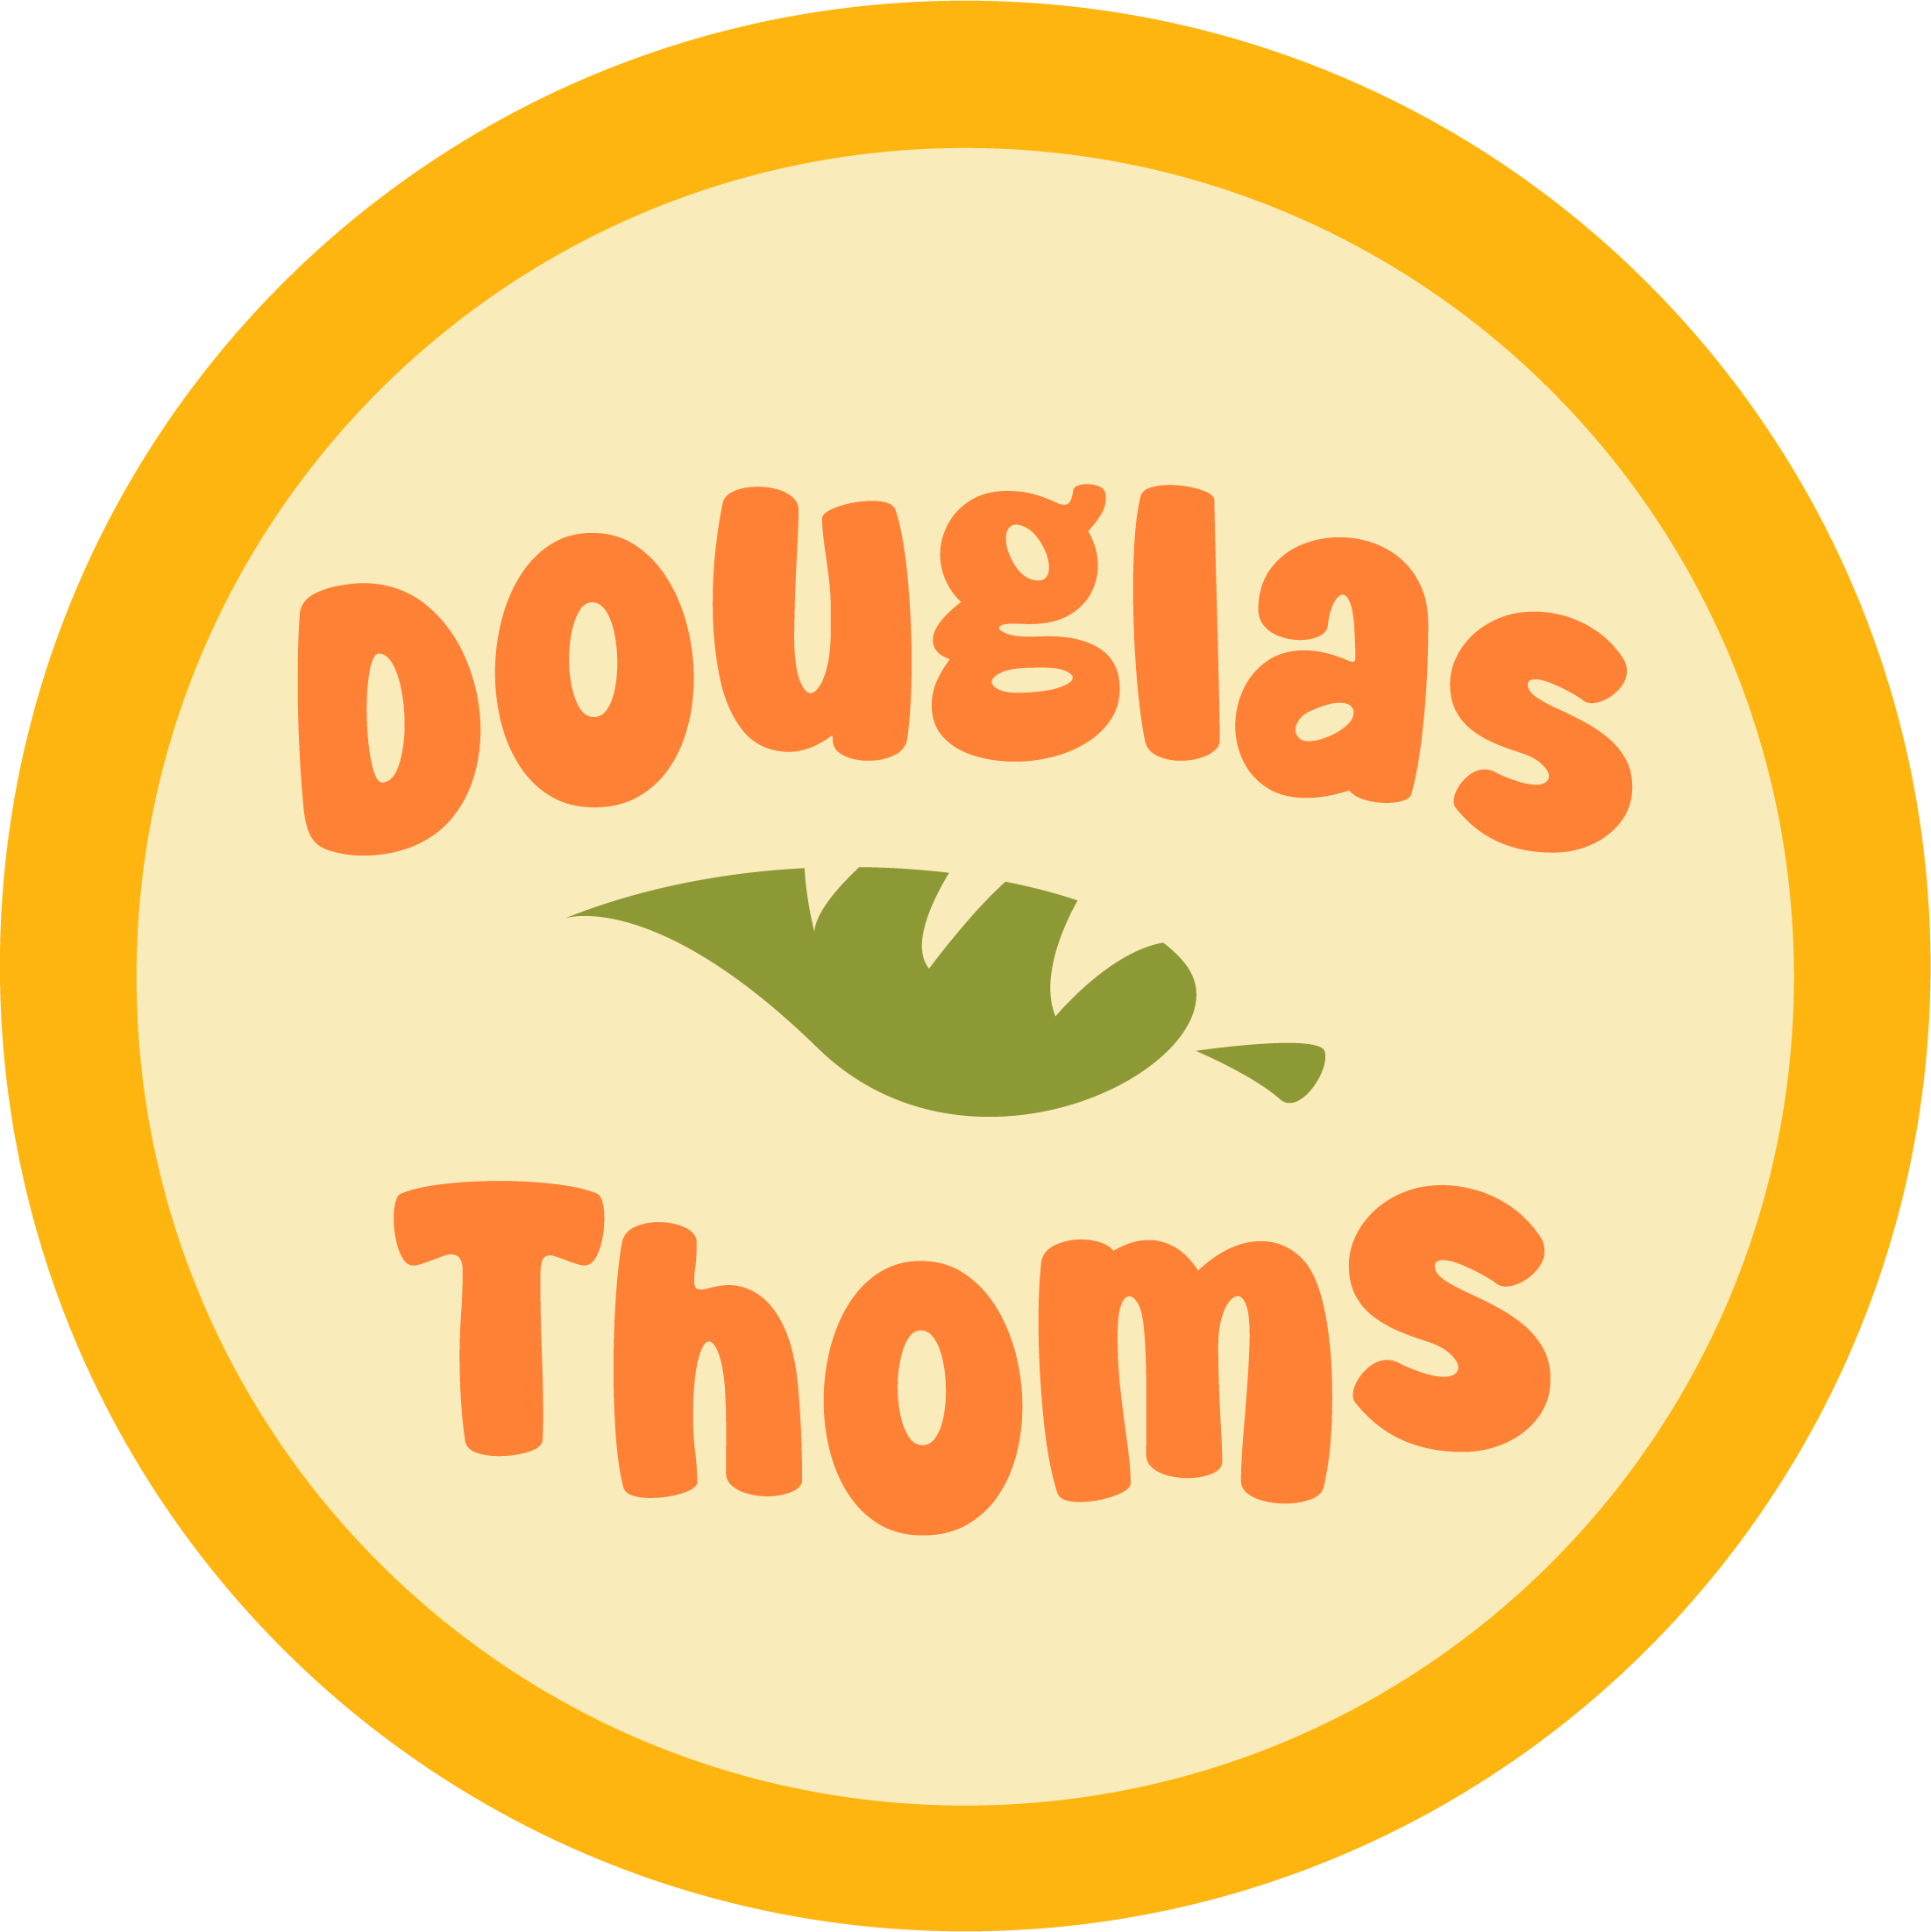 Douglas Thoms